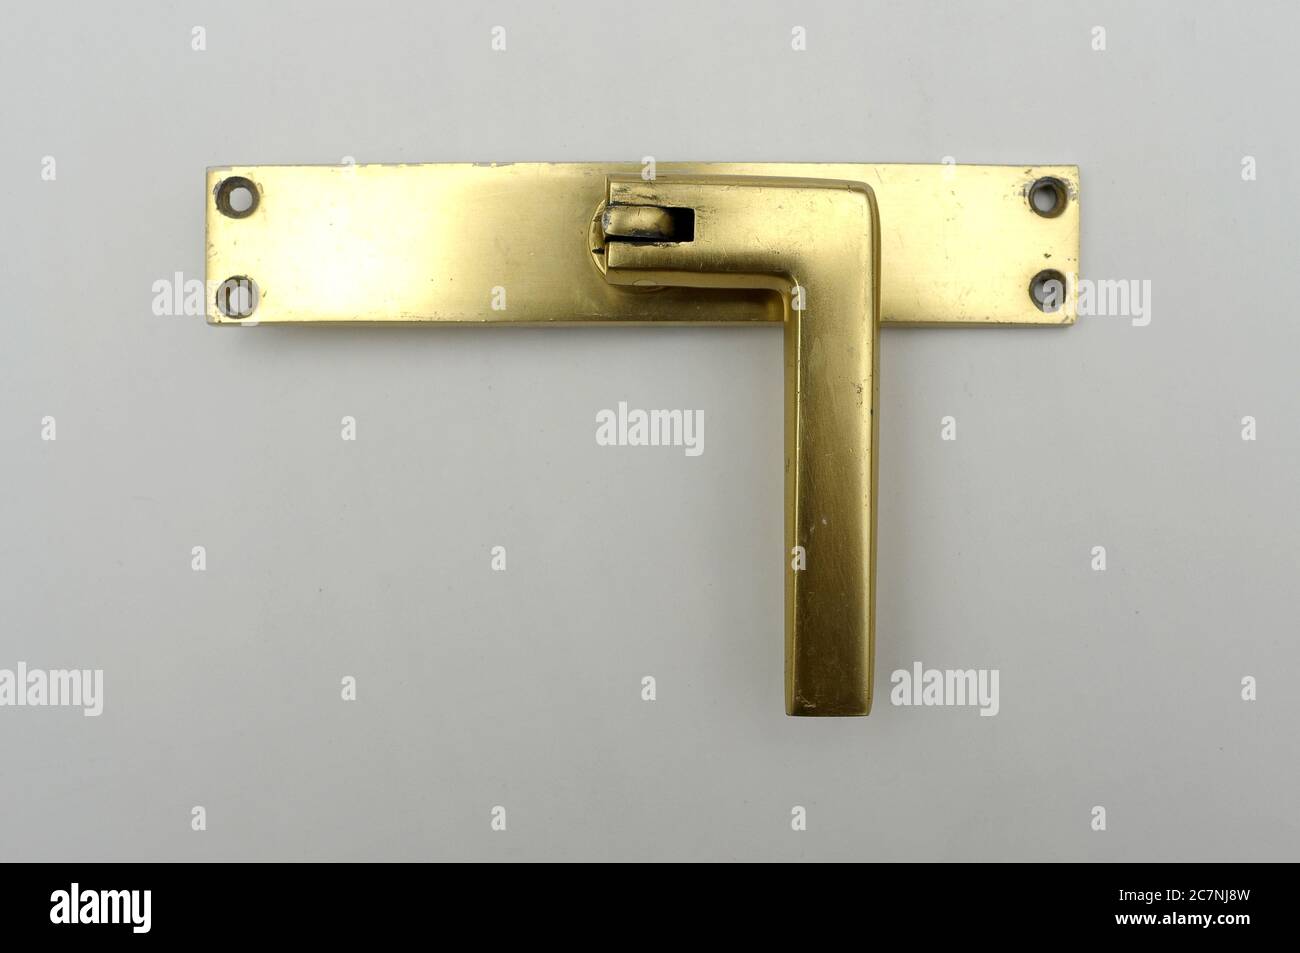 tirador de puerta plegable claramente utilizado Fotografía de stock - Alamy